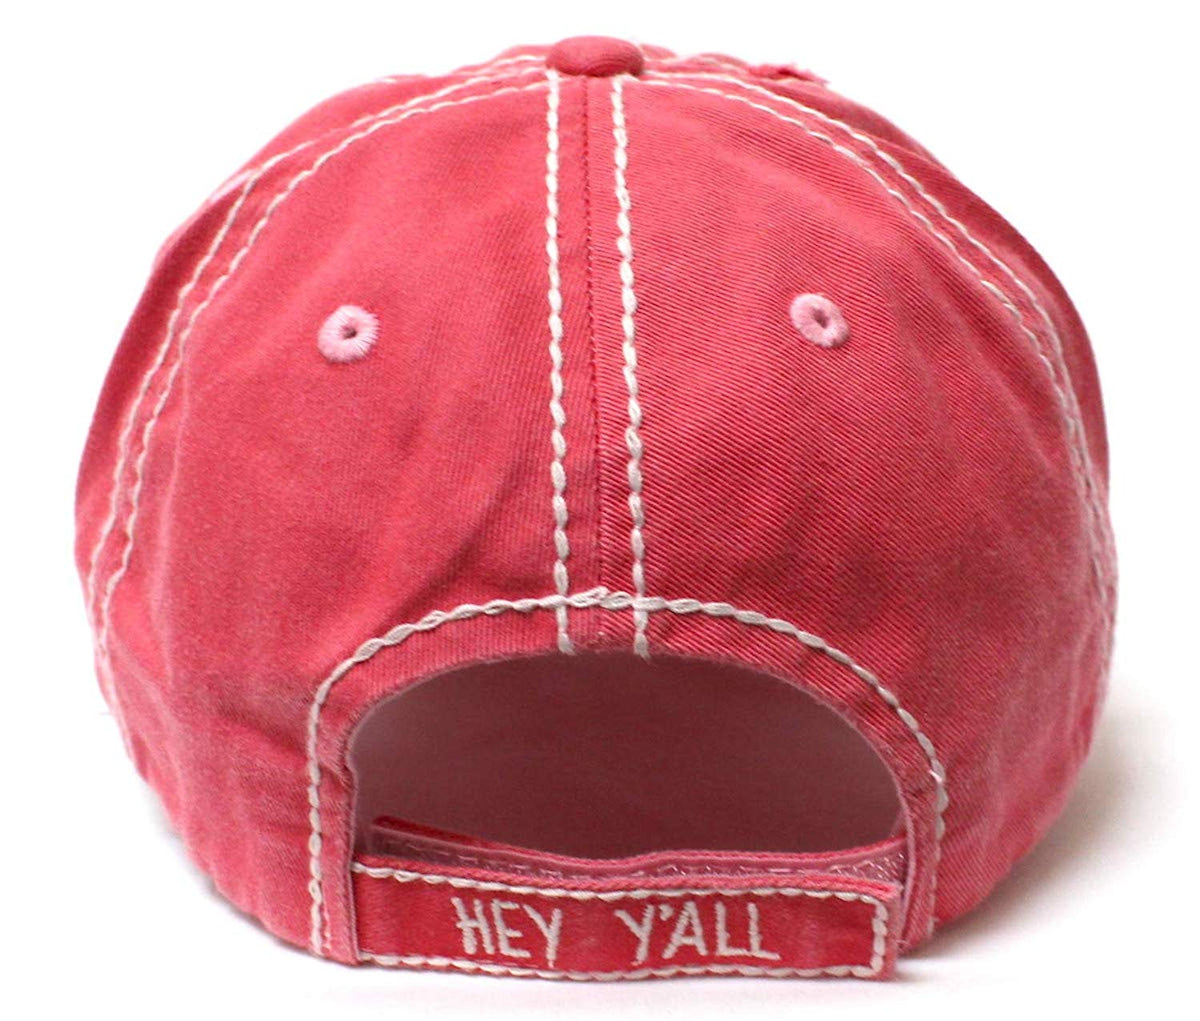 CAPS 'N VINTAGE New!! Royal Pink Hey Y'all Velvet Patch Emroidery Hat w/Heart Detail - Caps 'N Vintage 